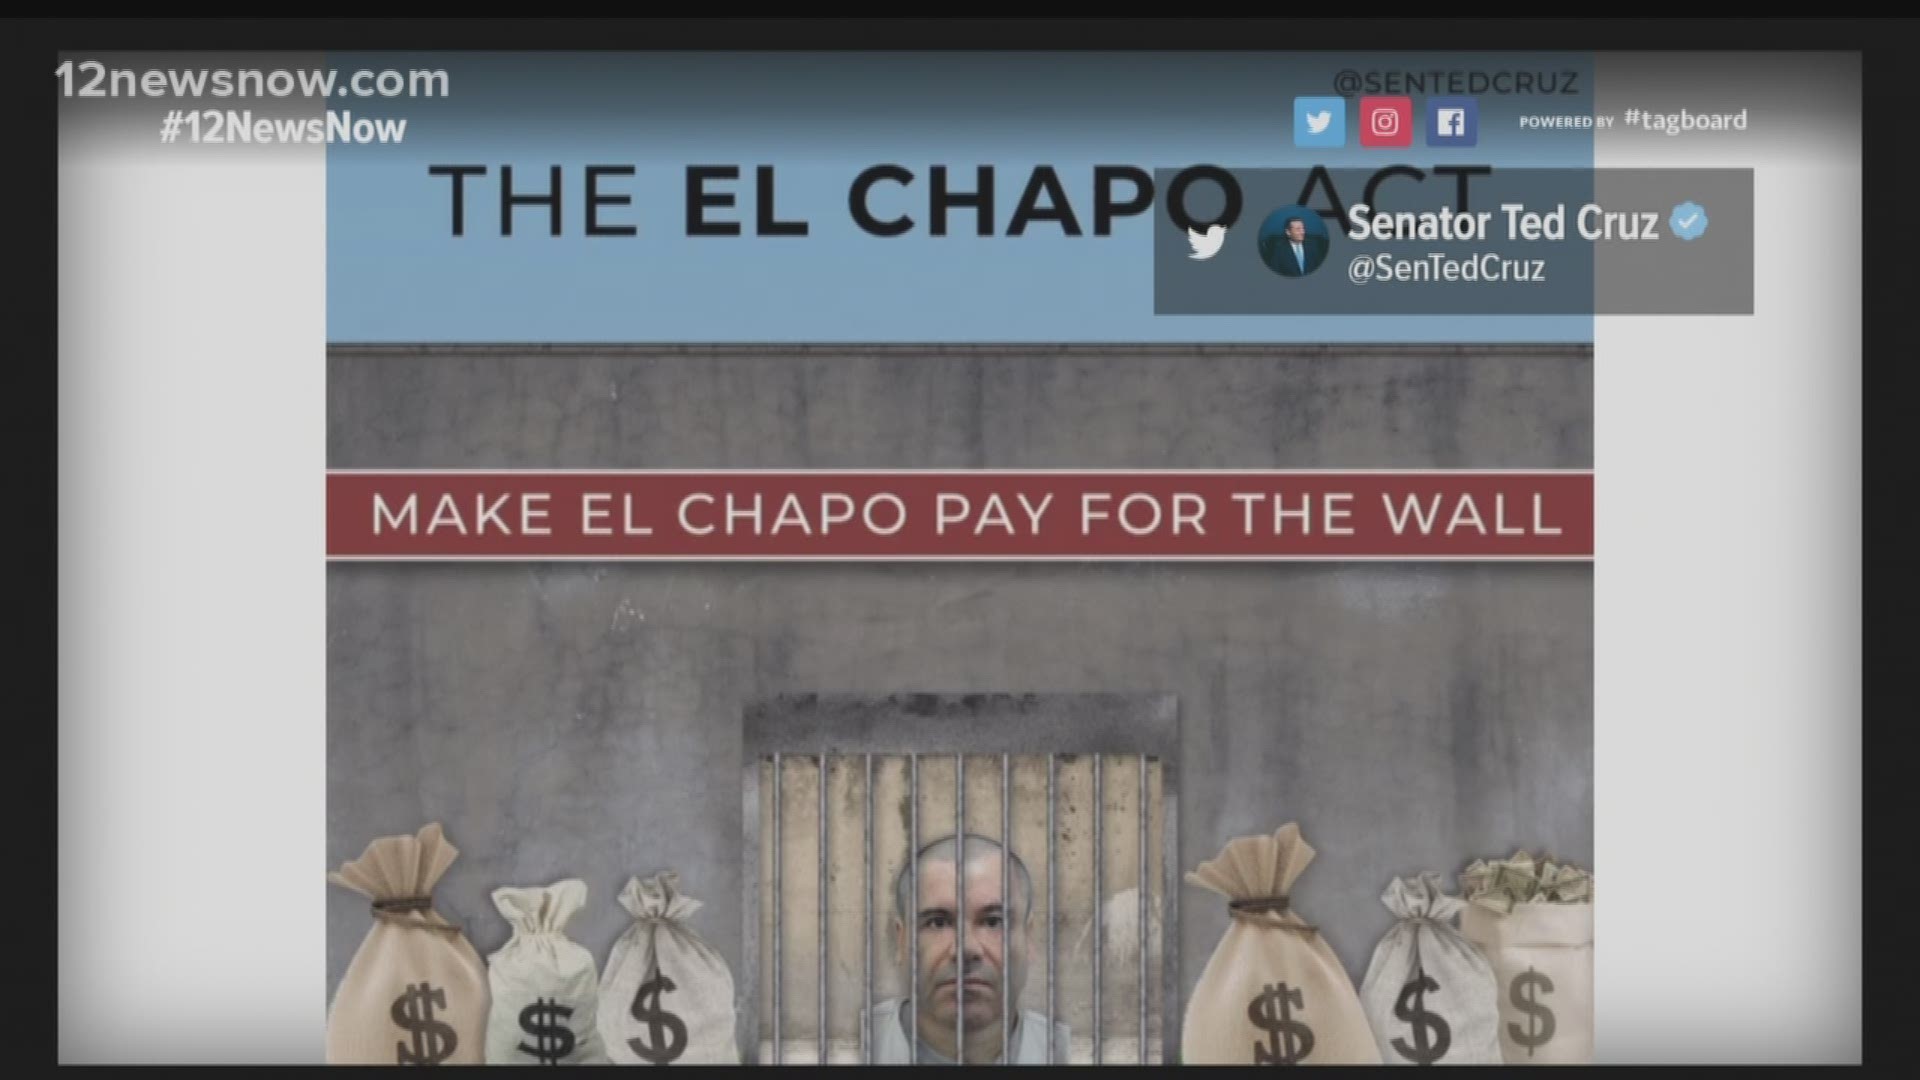 El Chapo was convicted on February 12, 2019.